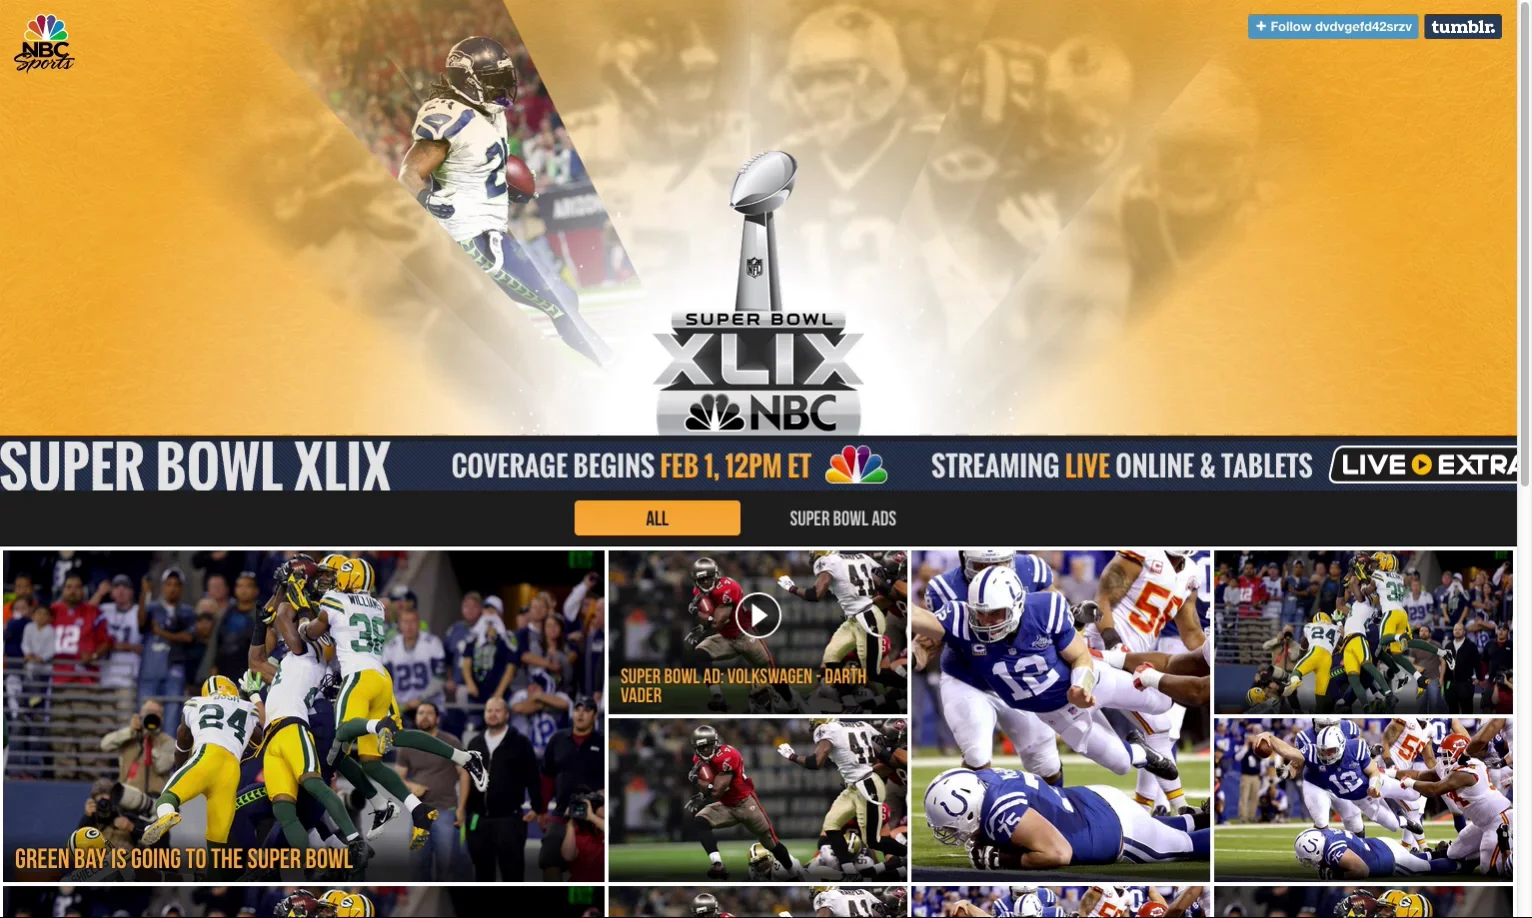 How to Watch Super Bowl XLIX Live Online